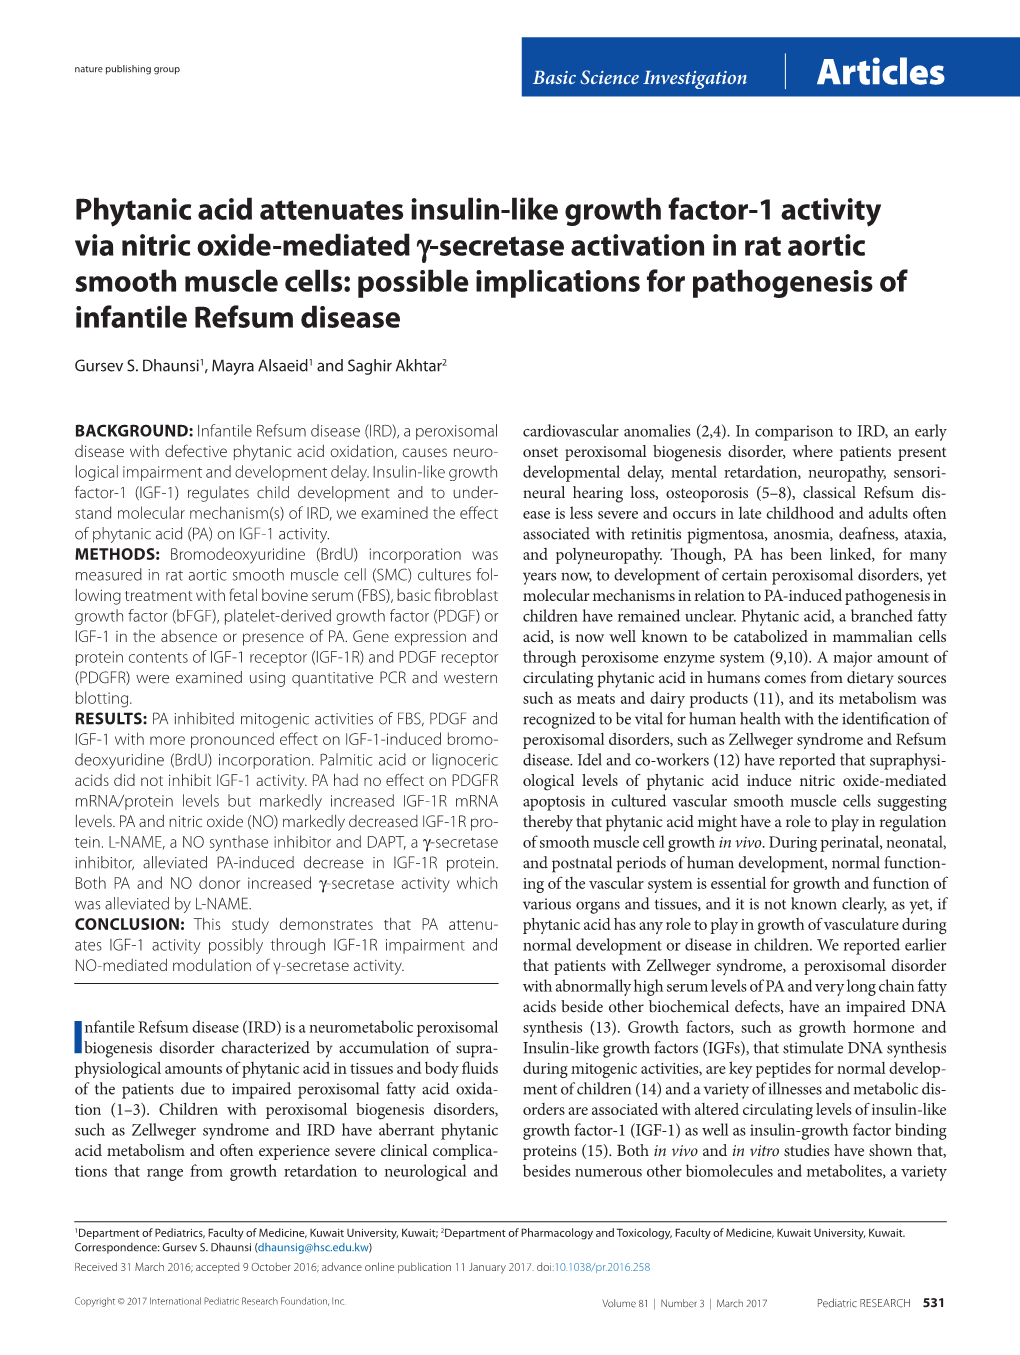 Phytanic Acid Attenuates Insulin-Like Growth Factor-1 Activity Via Nitric